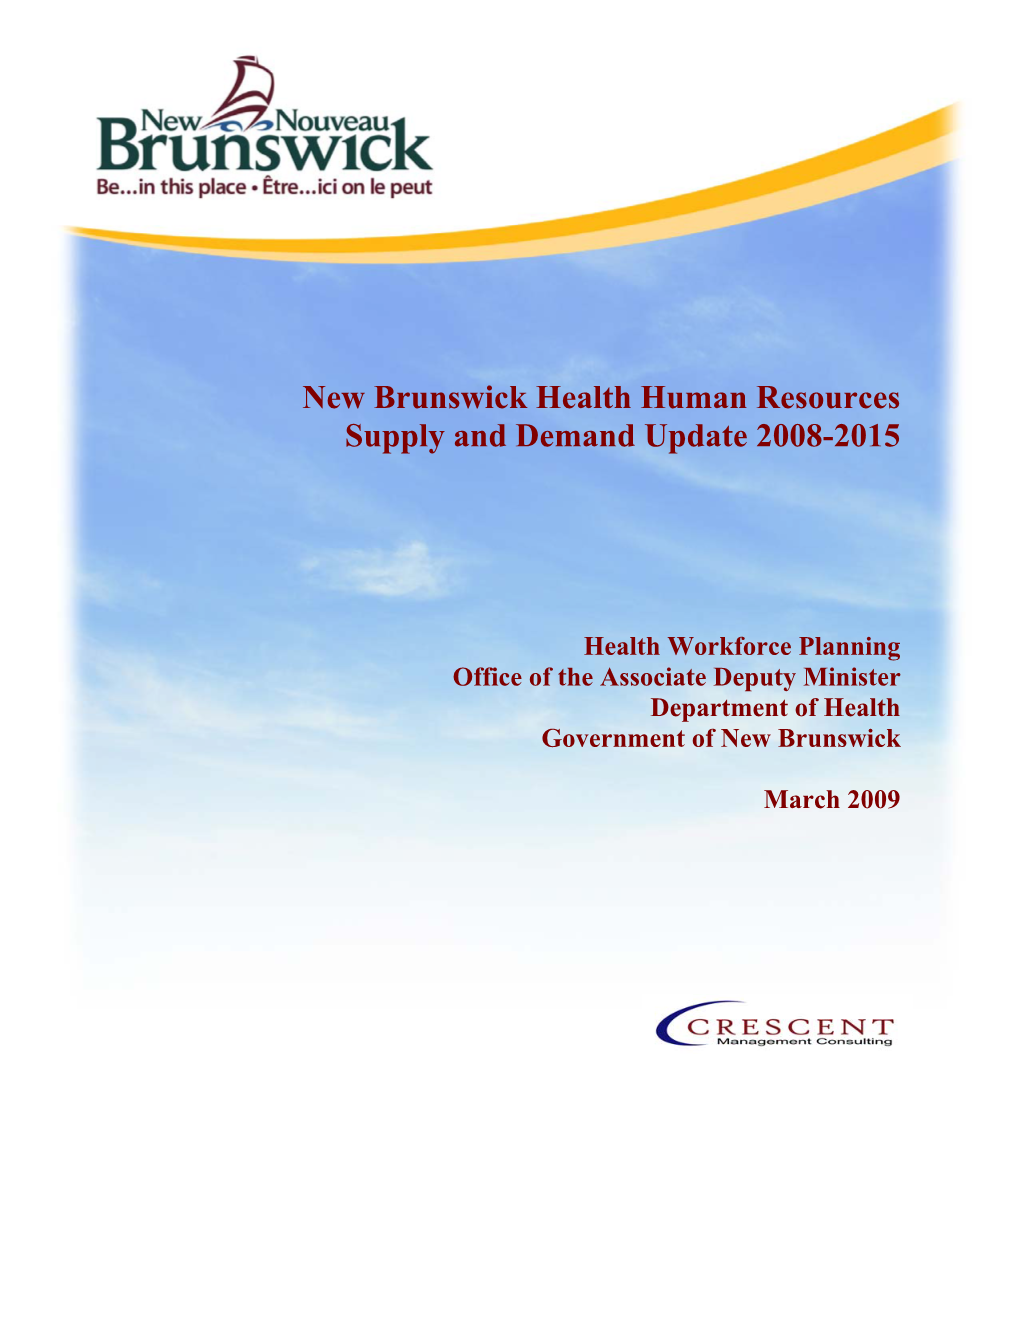 New Brunswick Health Human Resources Supply and Demand Update 2008-2015